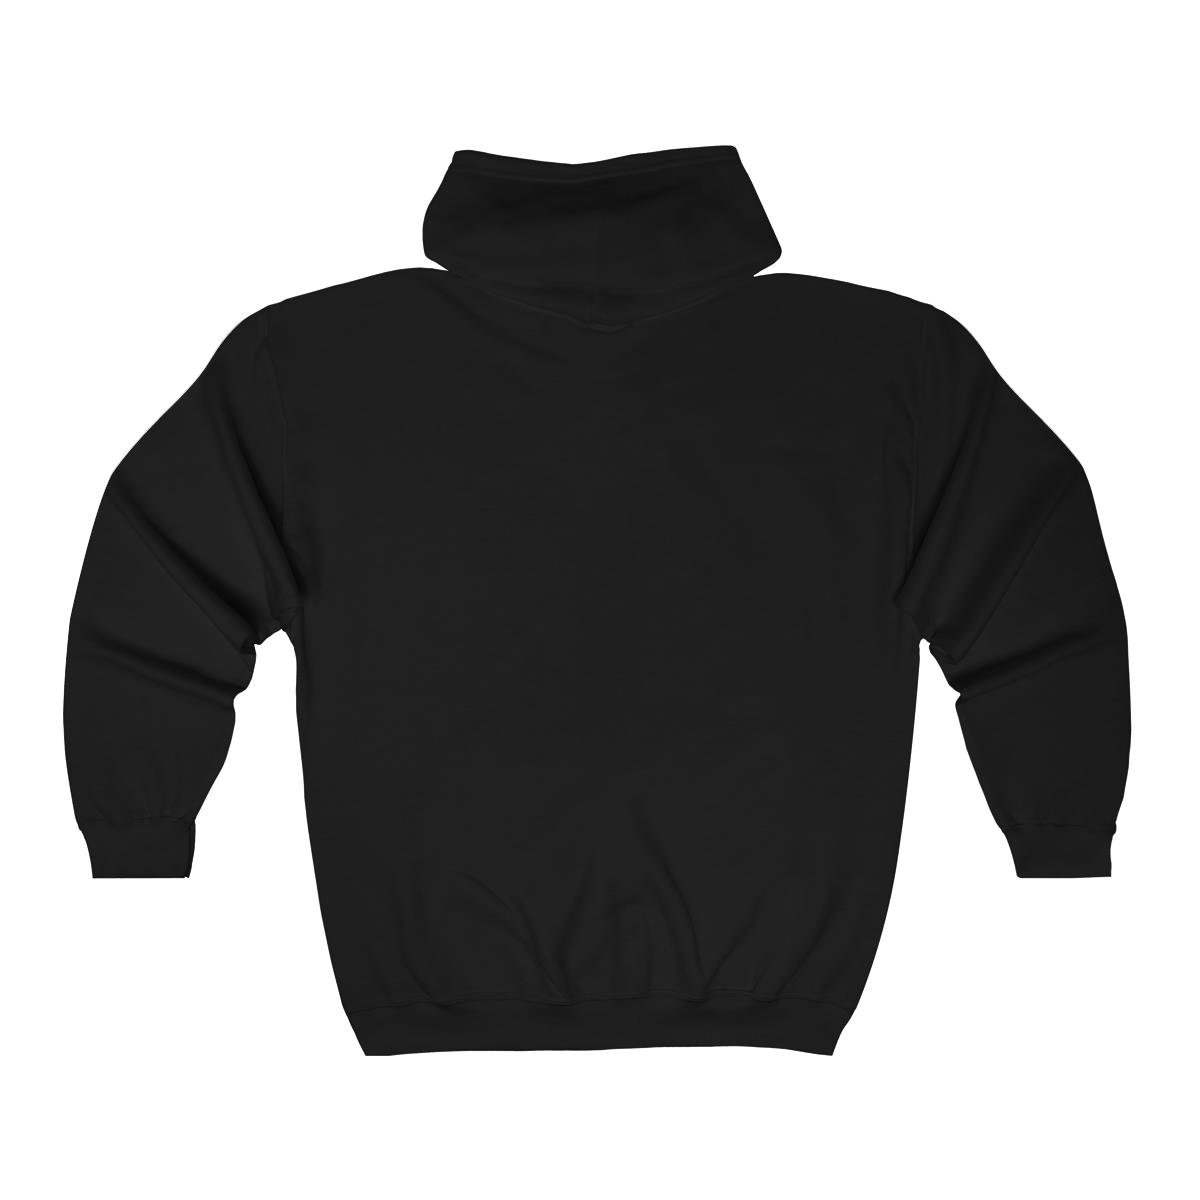 Stryken – Blitzkrieg Full Zip Hooded Sweatshirt